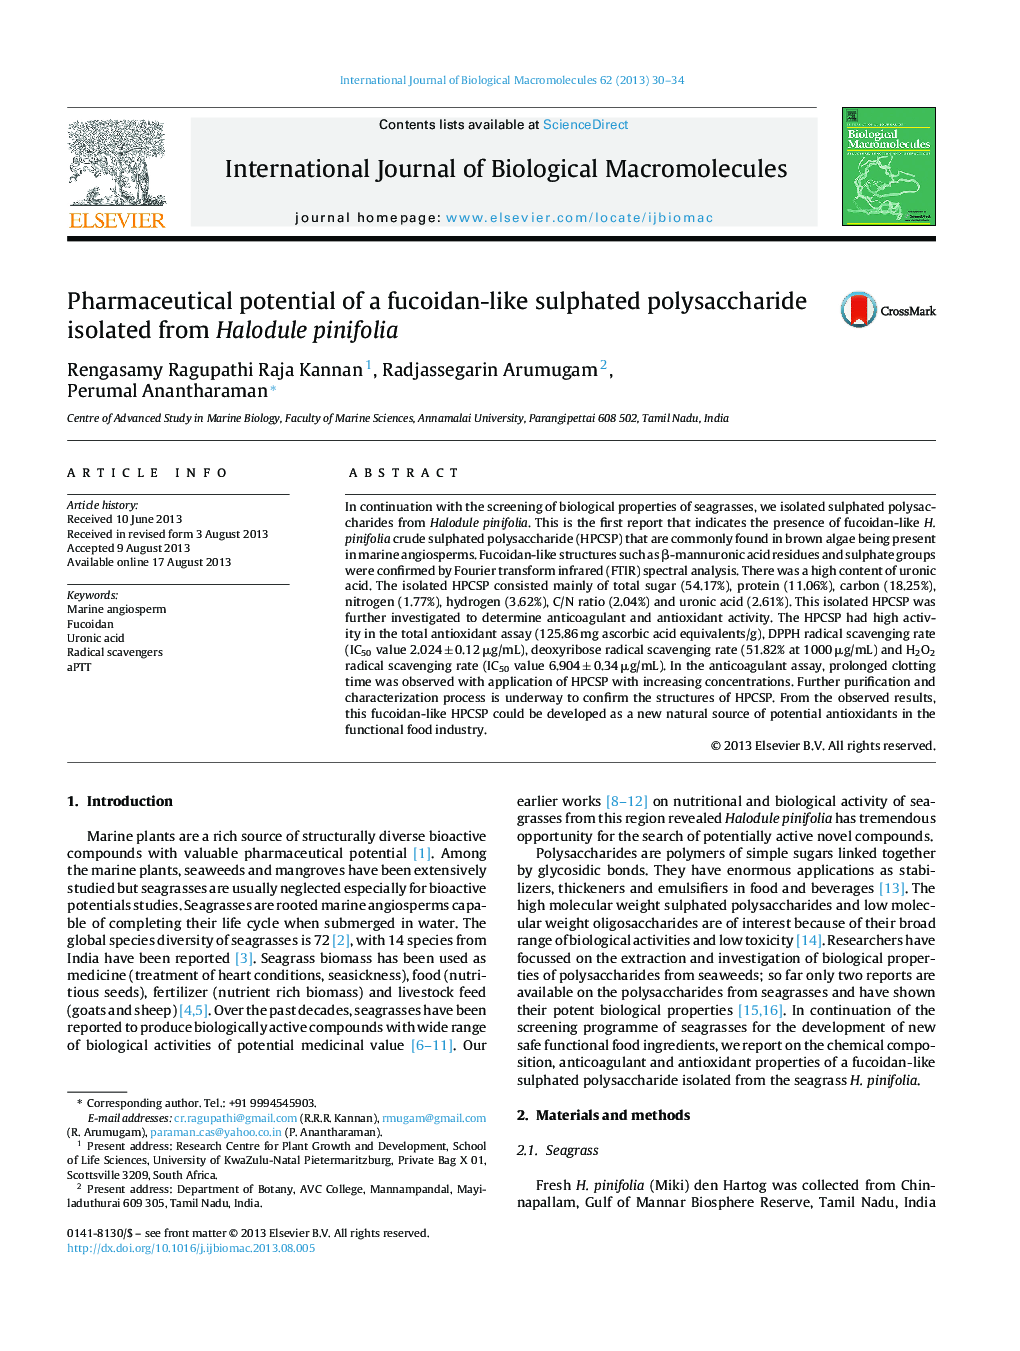 Pharmaceutical potential of a fucoidan-like sulphated polysaccharide isolated from Halodule pinifolia